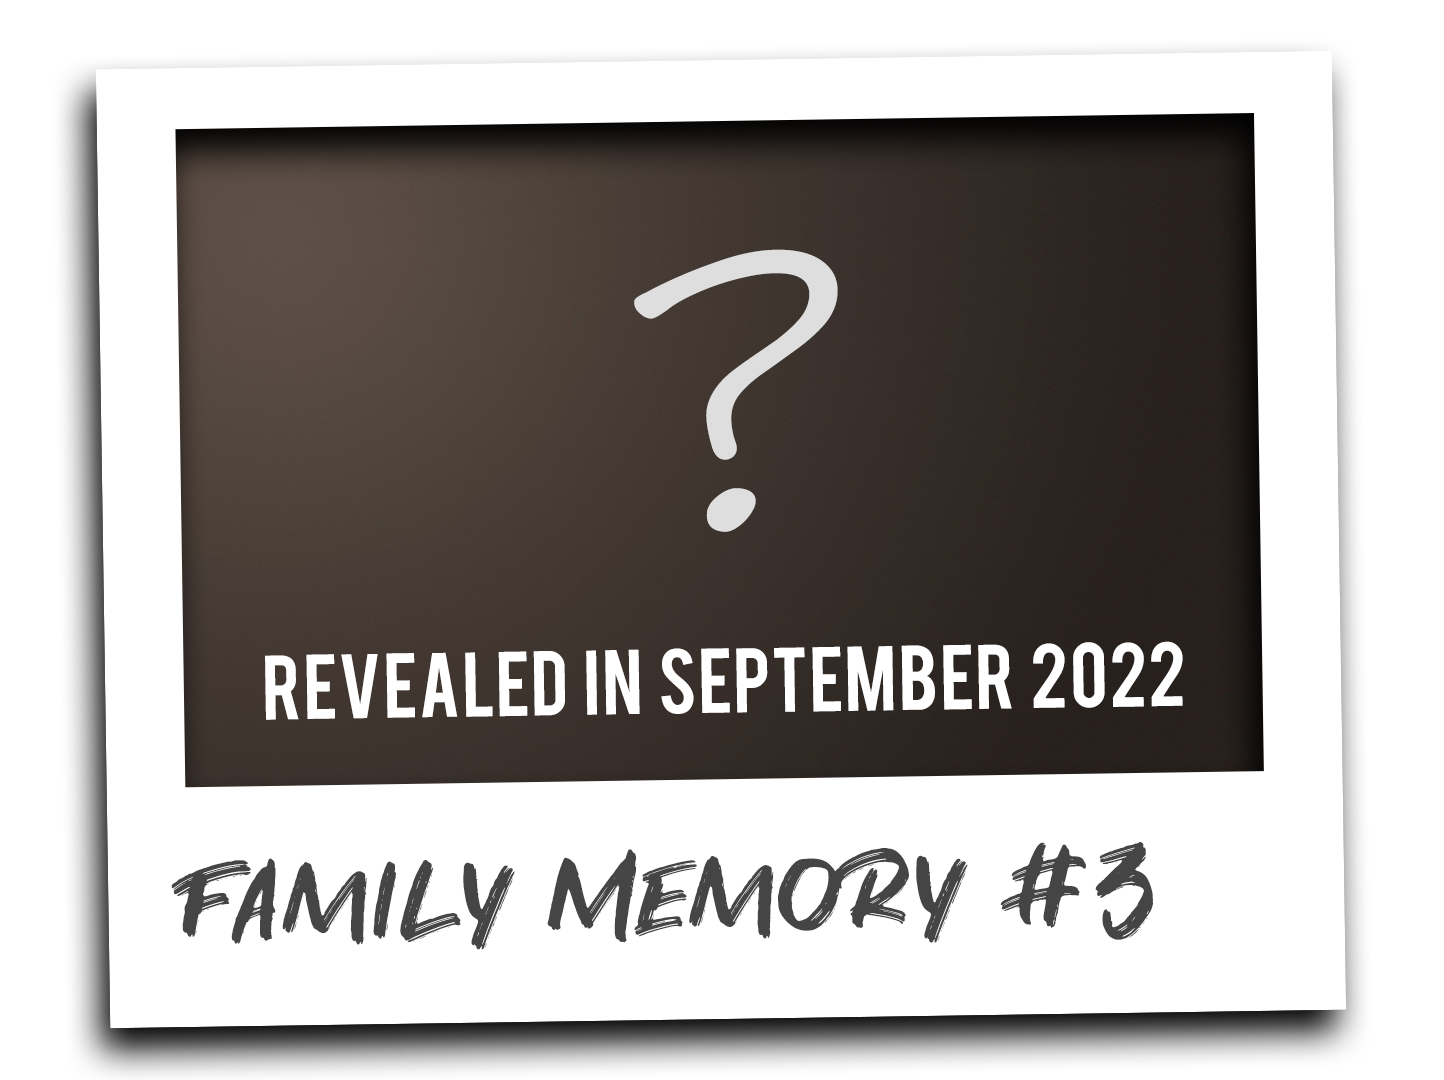 Family Memory #3